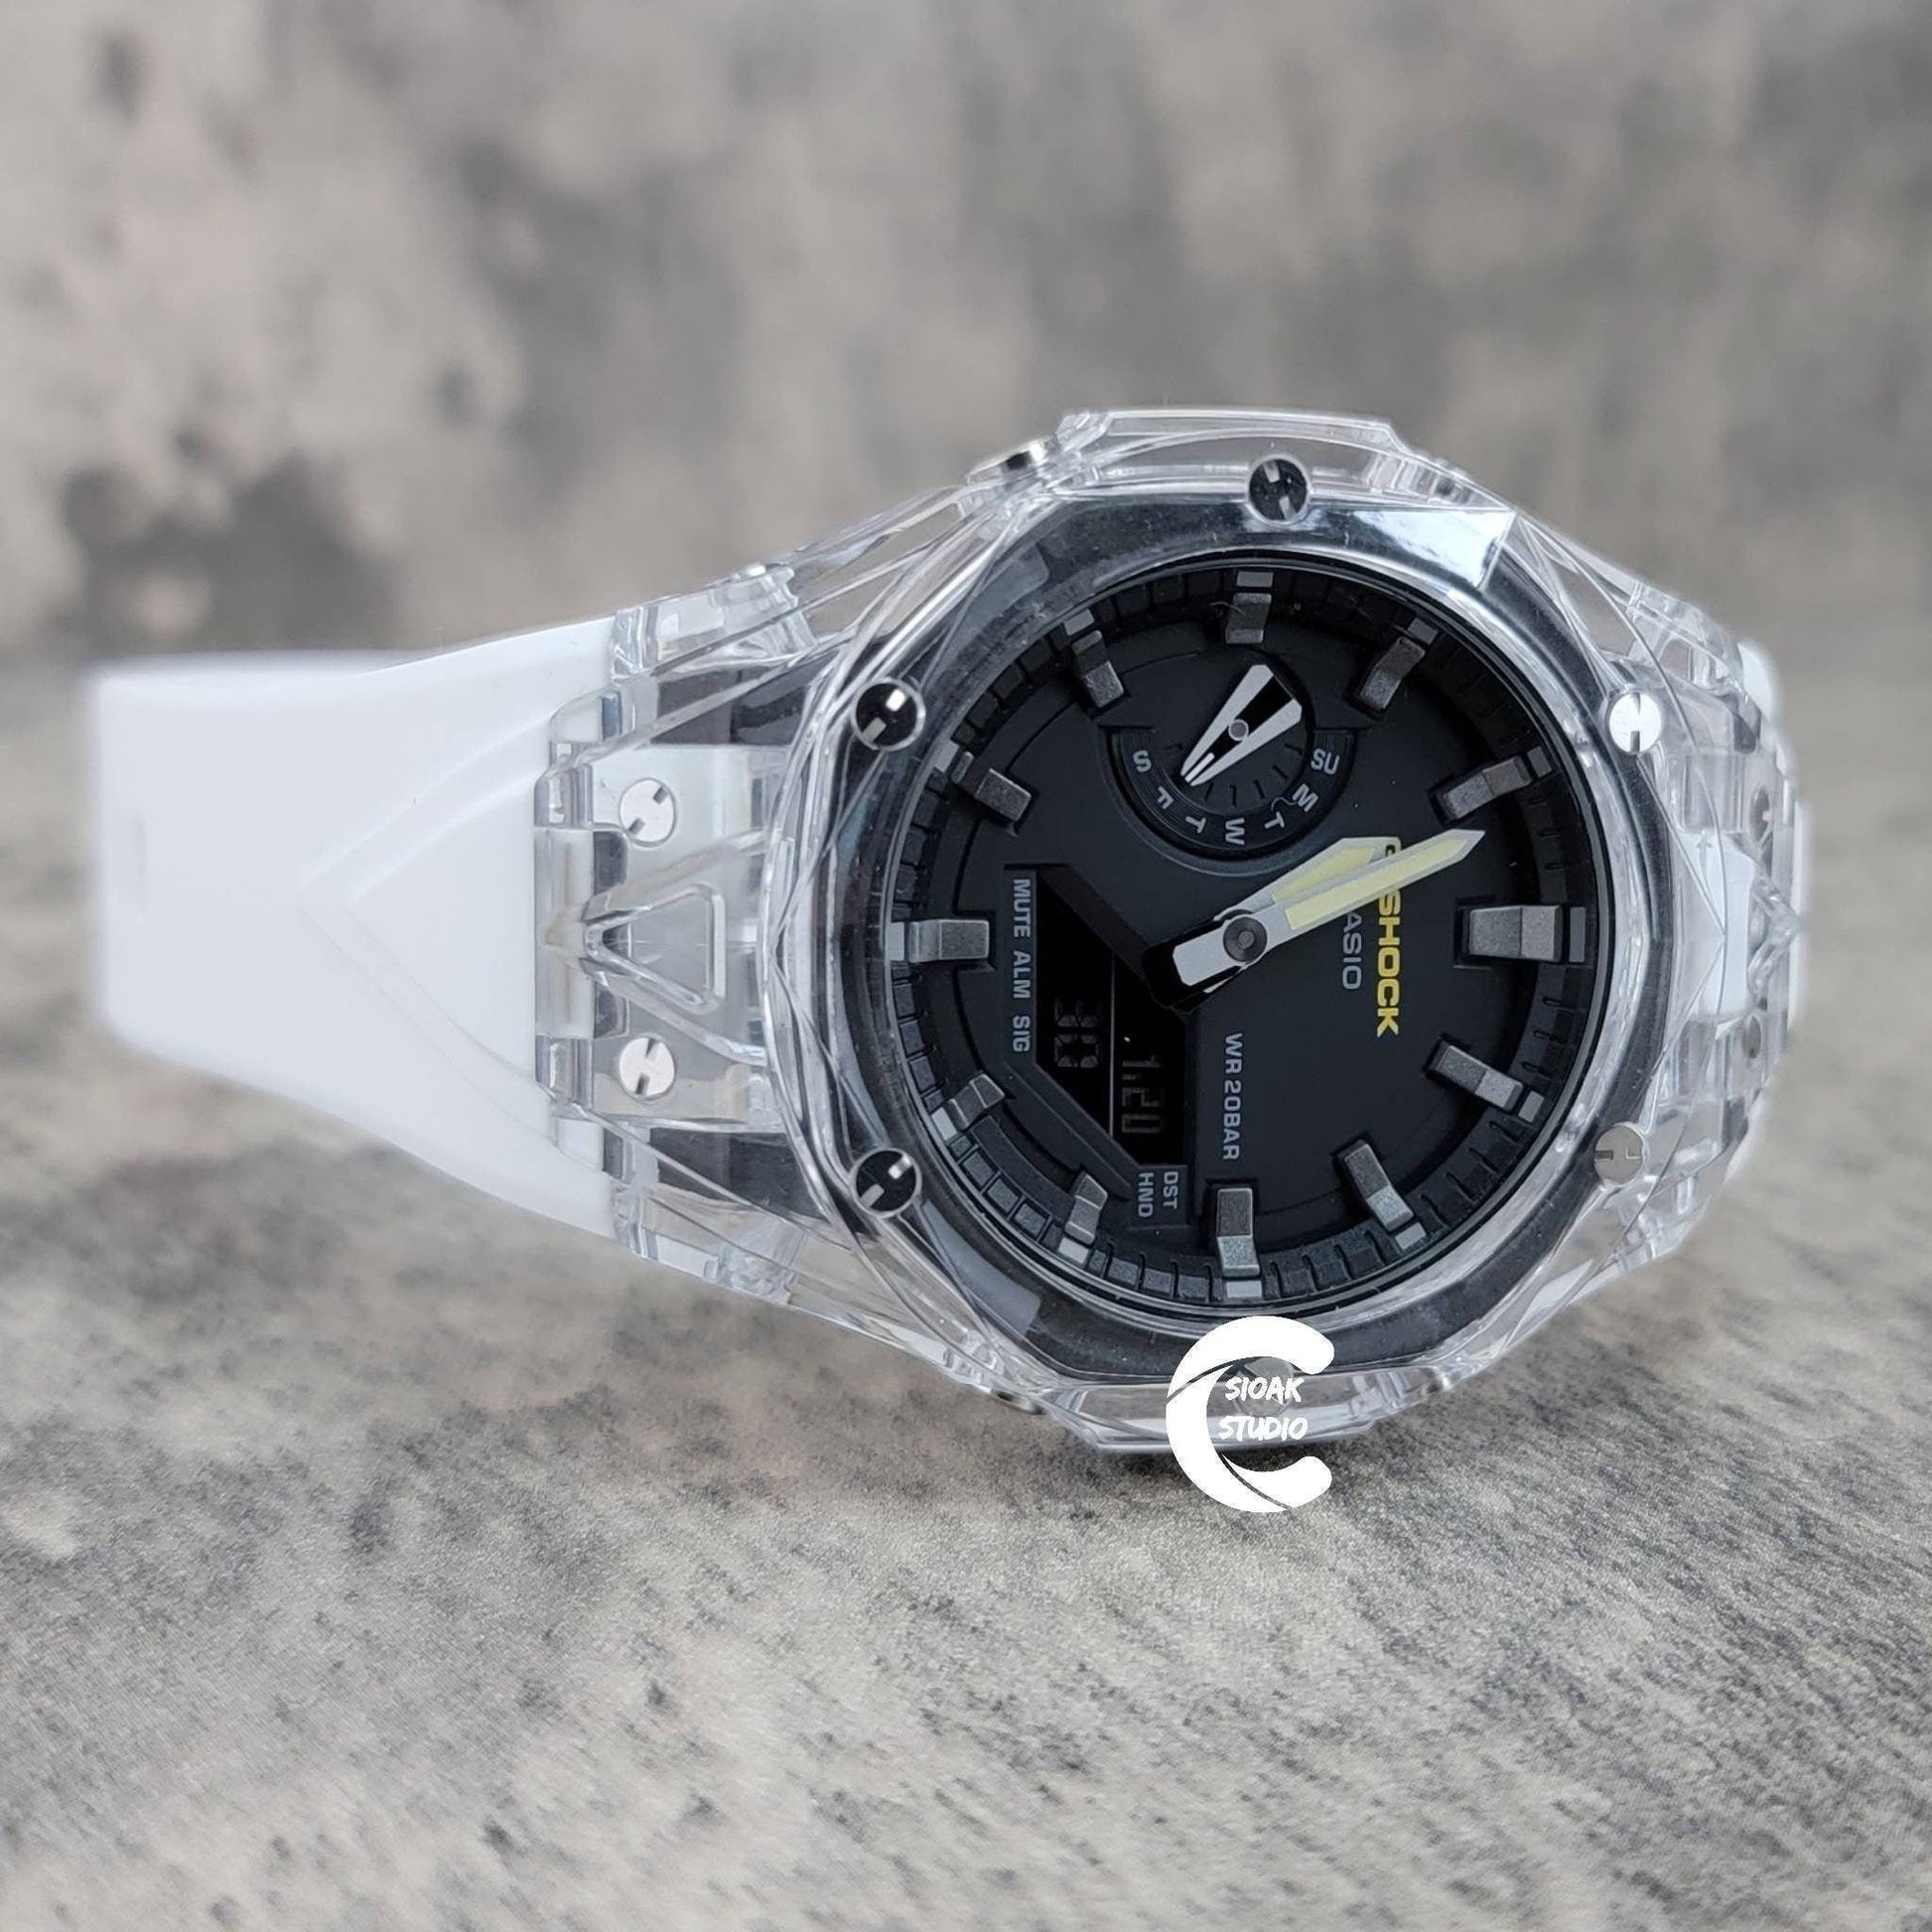 Casioak Mod Watch Transparent Case White Strap Black Gray Time Mark Black Dial 44mm - Casioak Studio